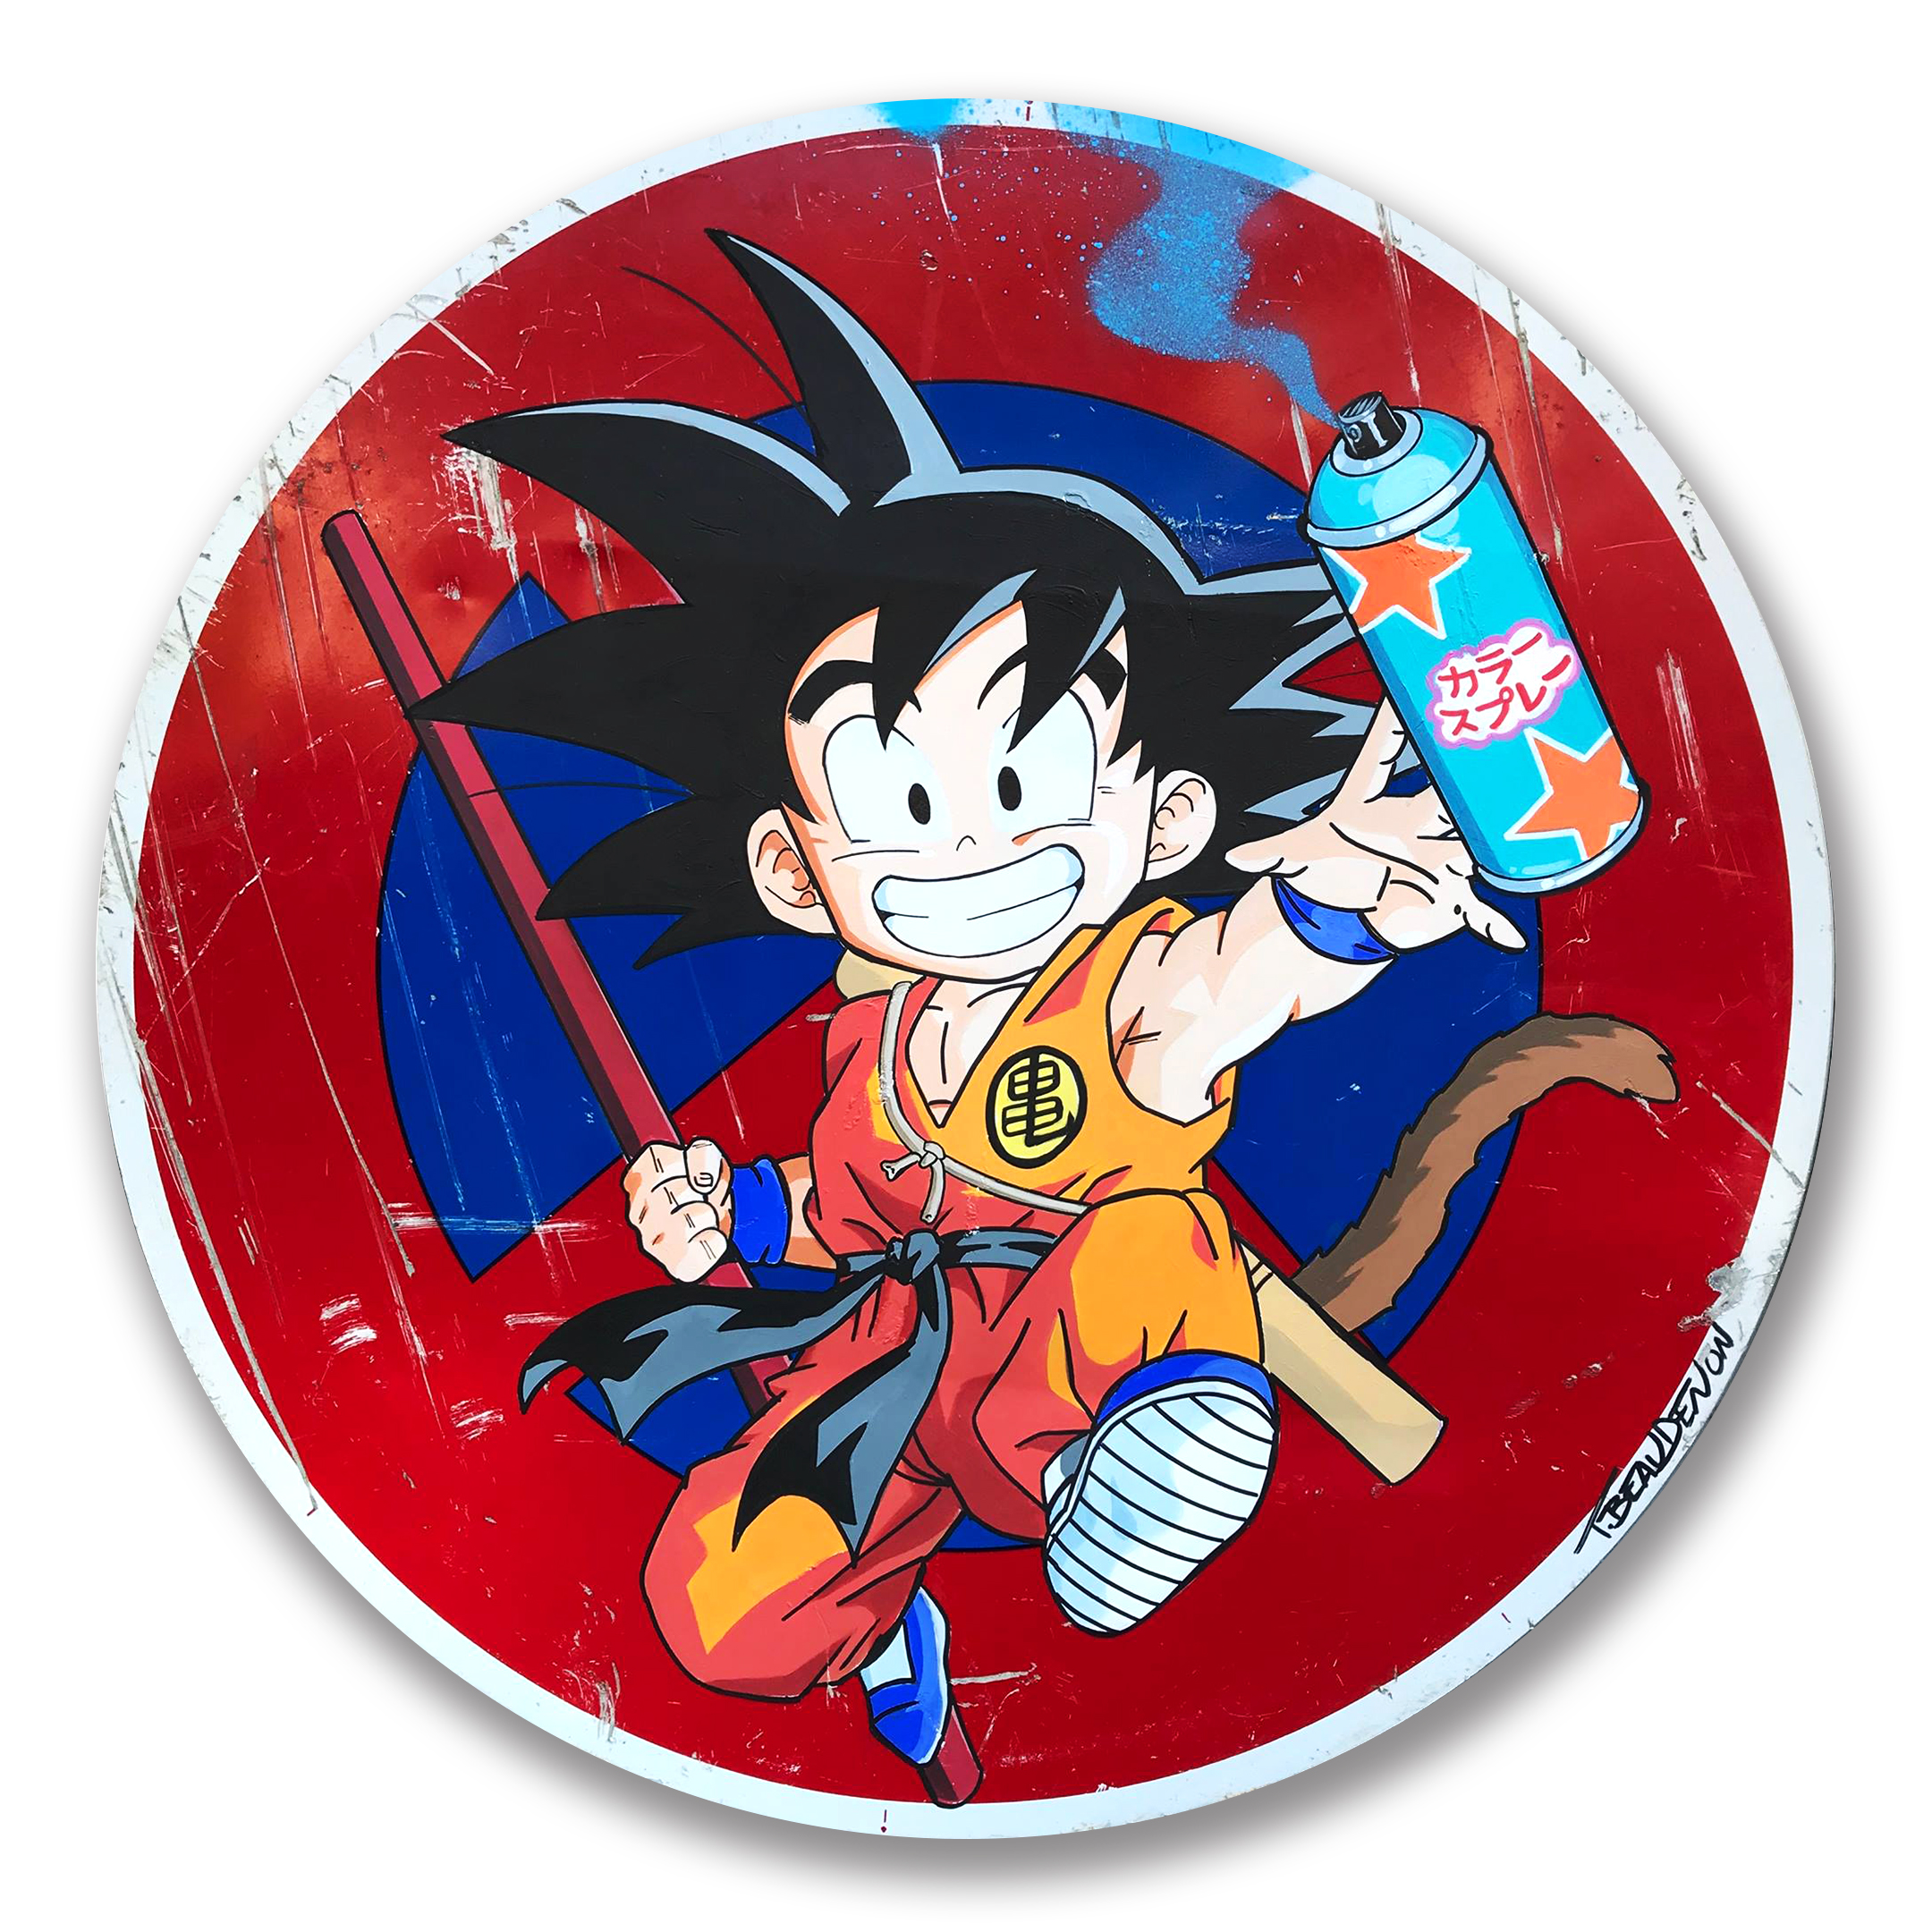 Arteido - Thierry Beaudenon - Peinture - Panneau Signalisation - Dragon Ball 5 Son Goku - Rond